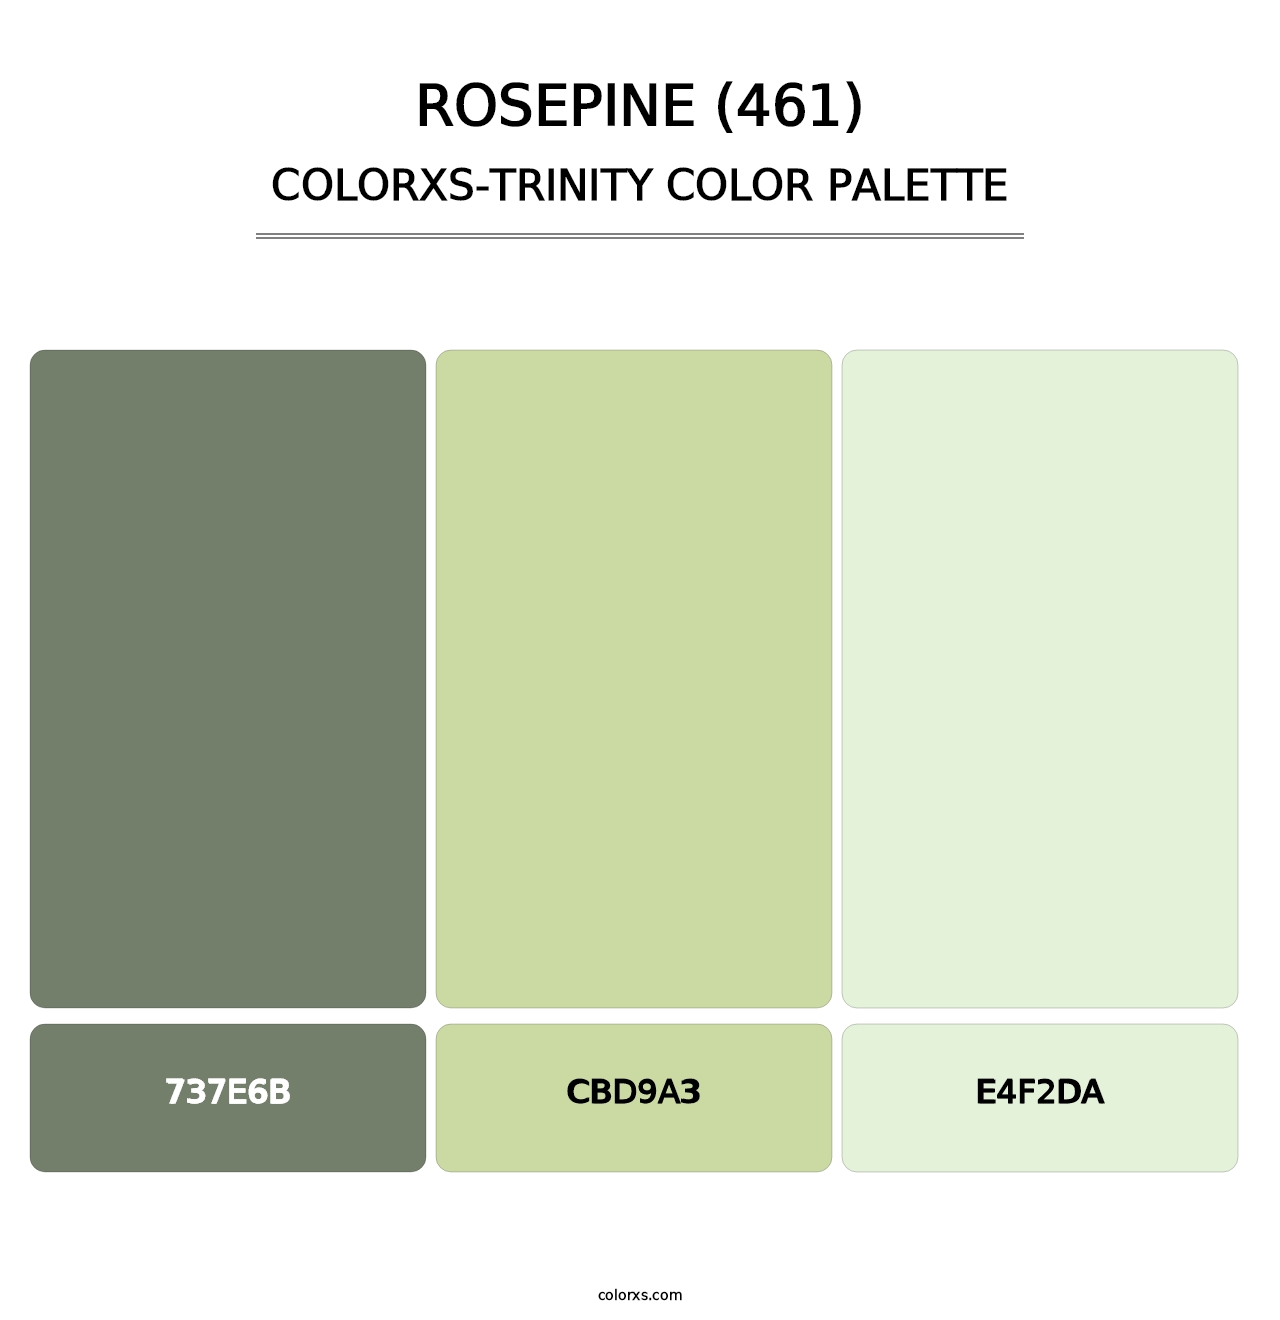 Rosepine (461) - Colorxs Trinity Palette